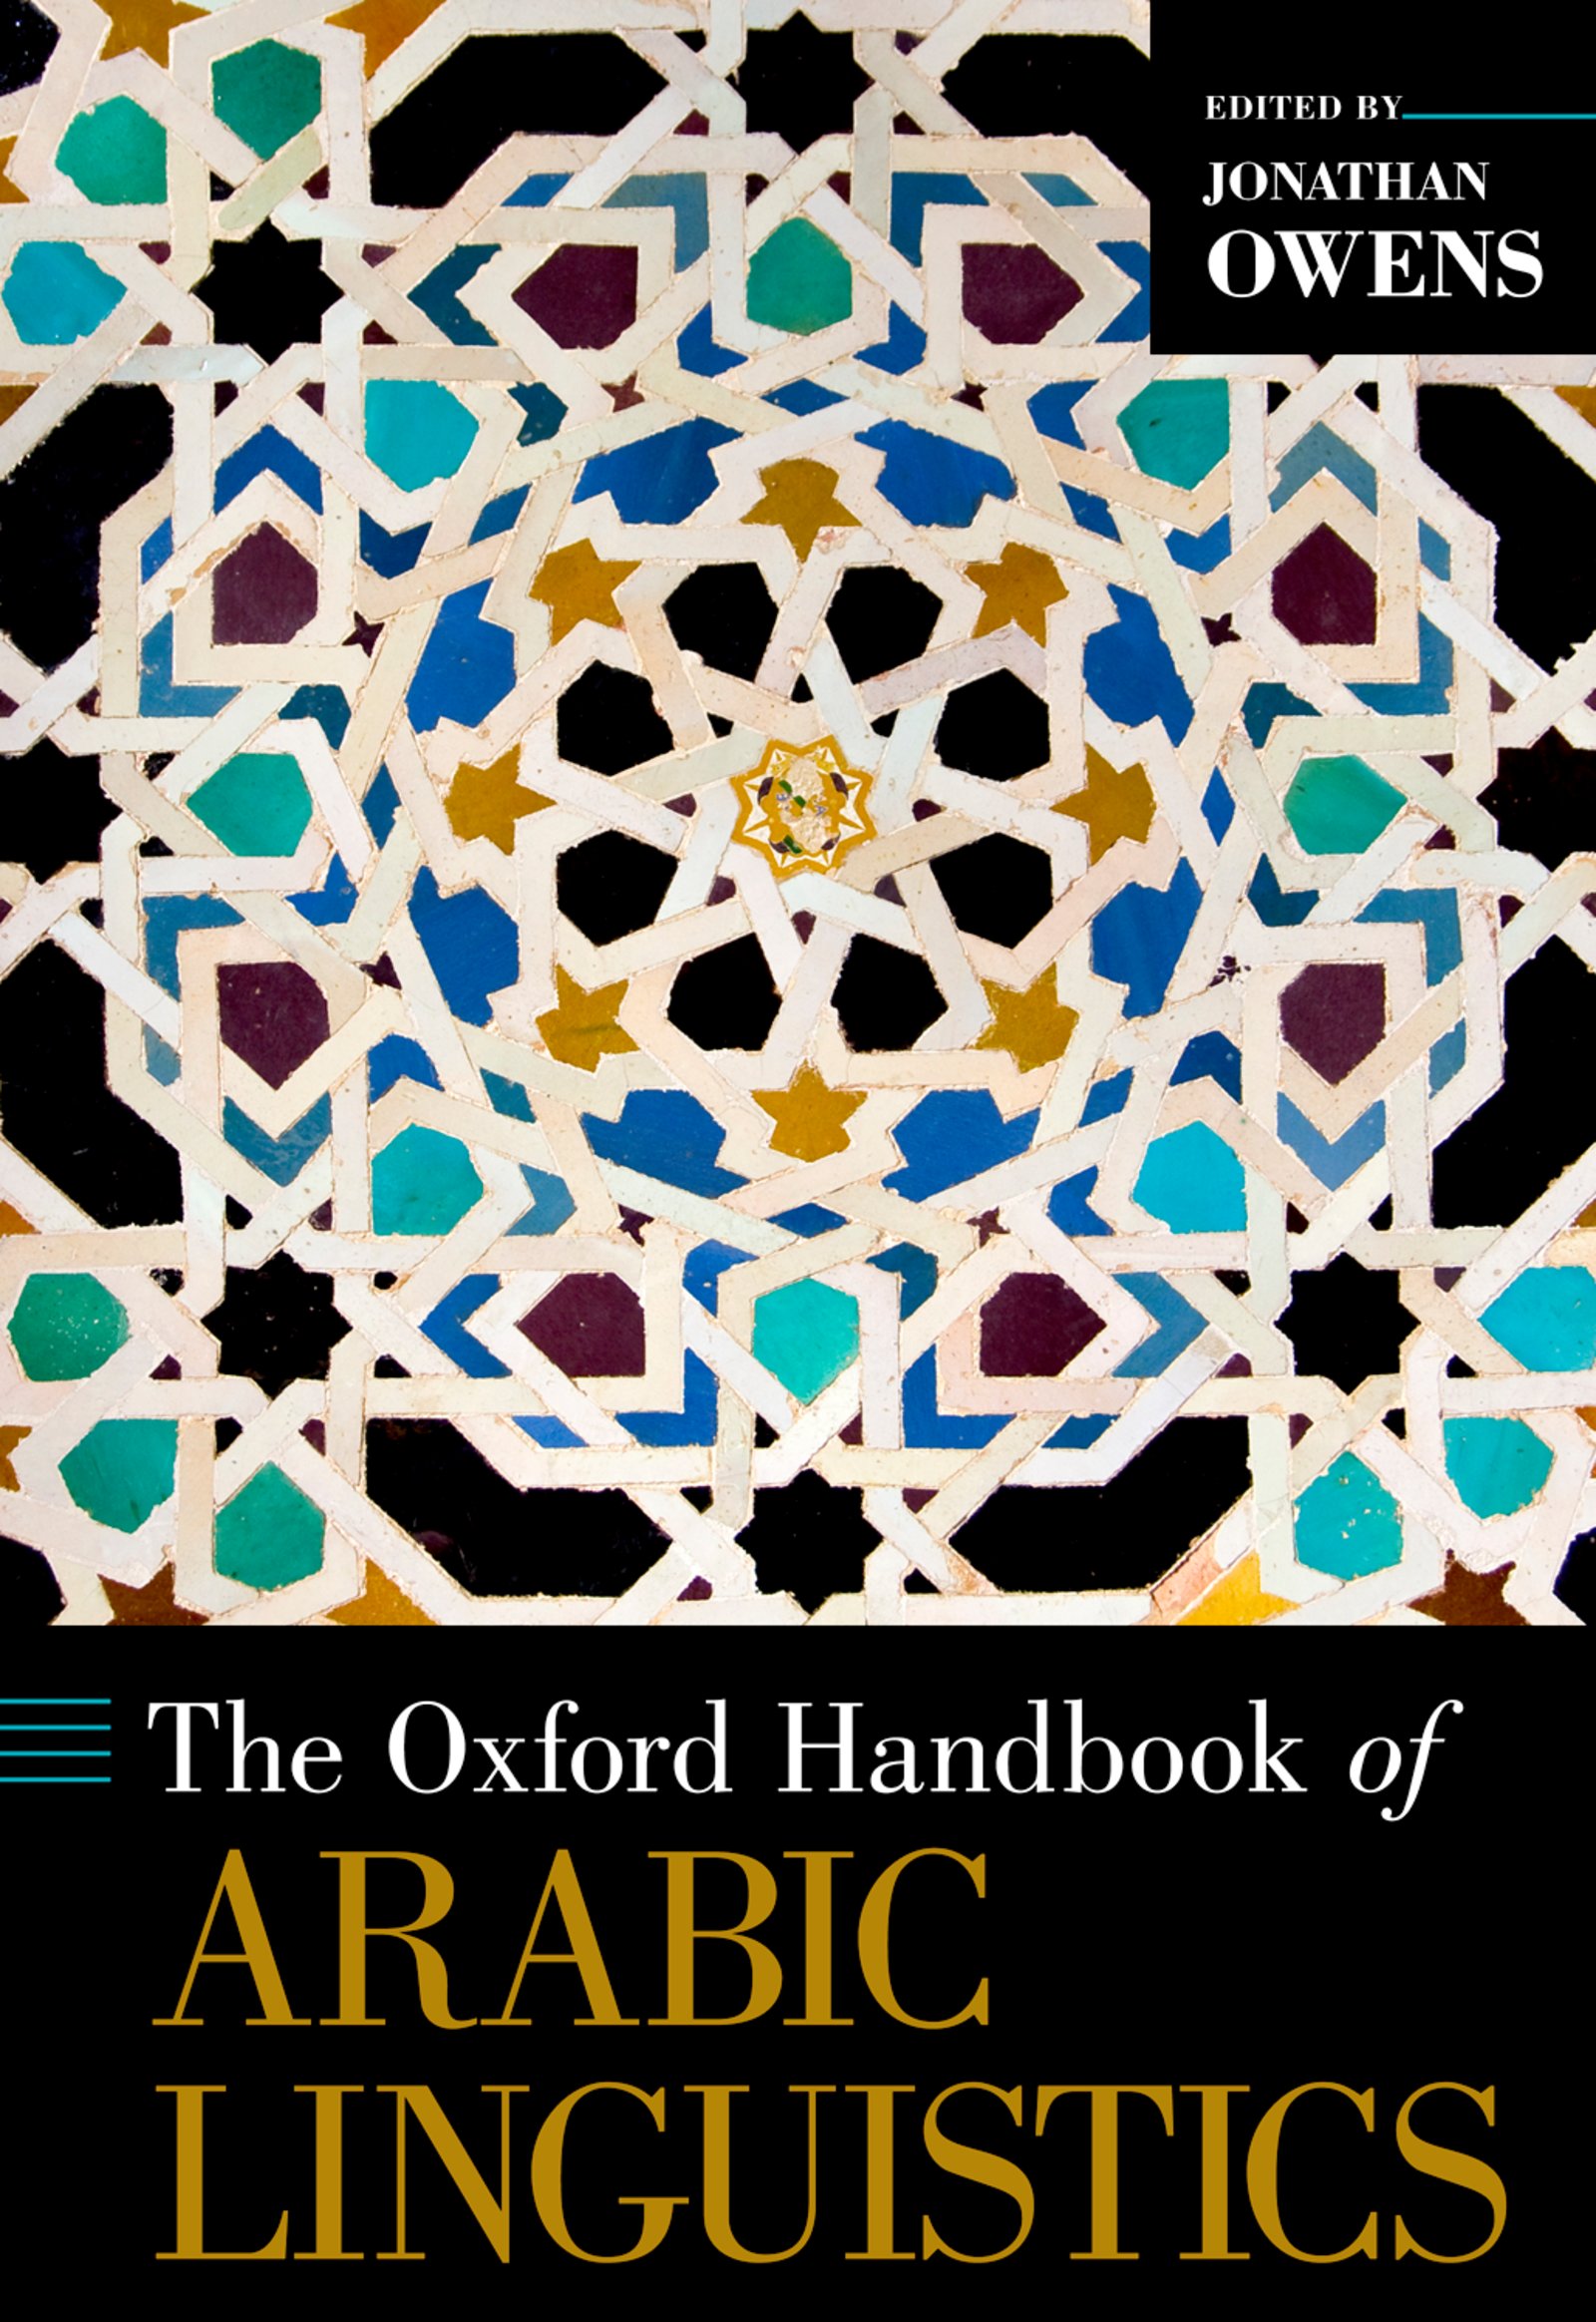 The Oxford Handbook of Arabic Linguistics - 50-99.99